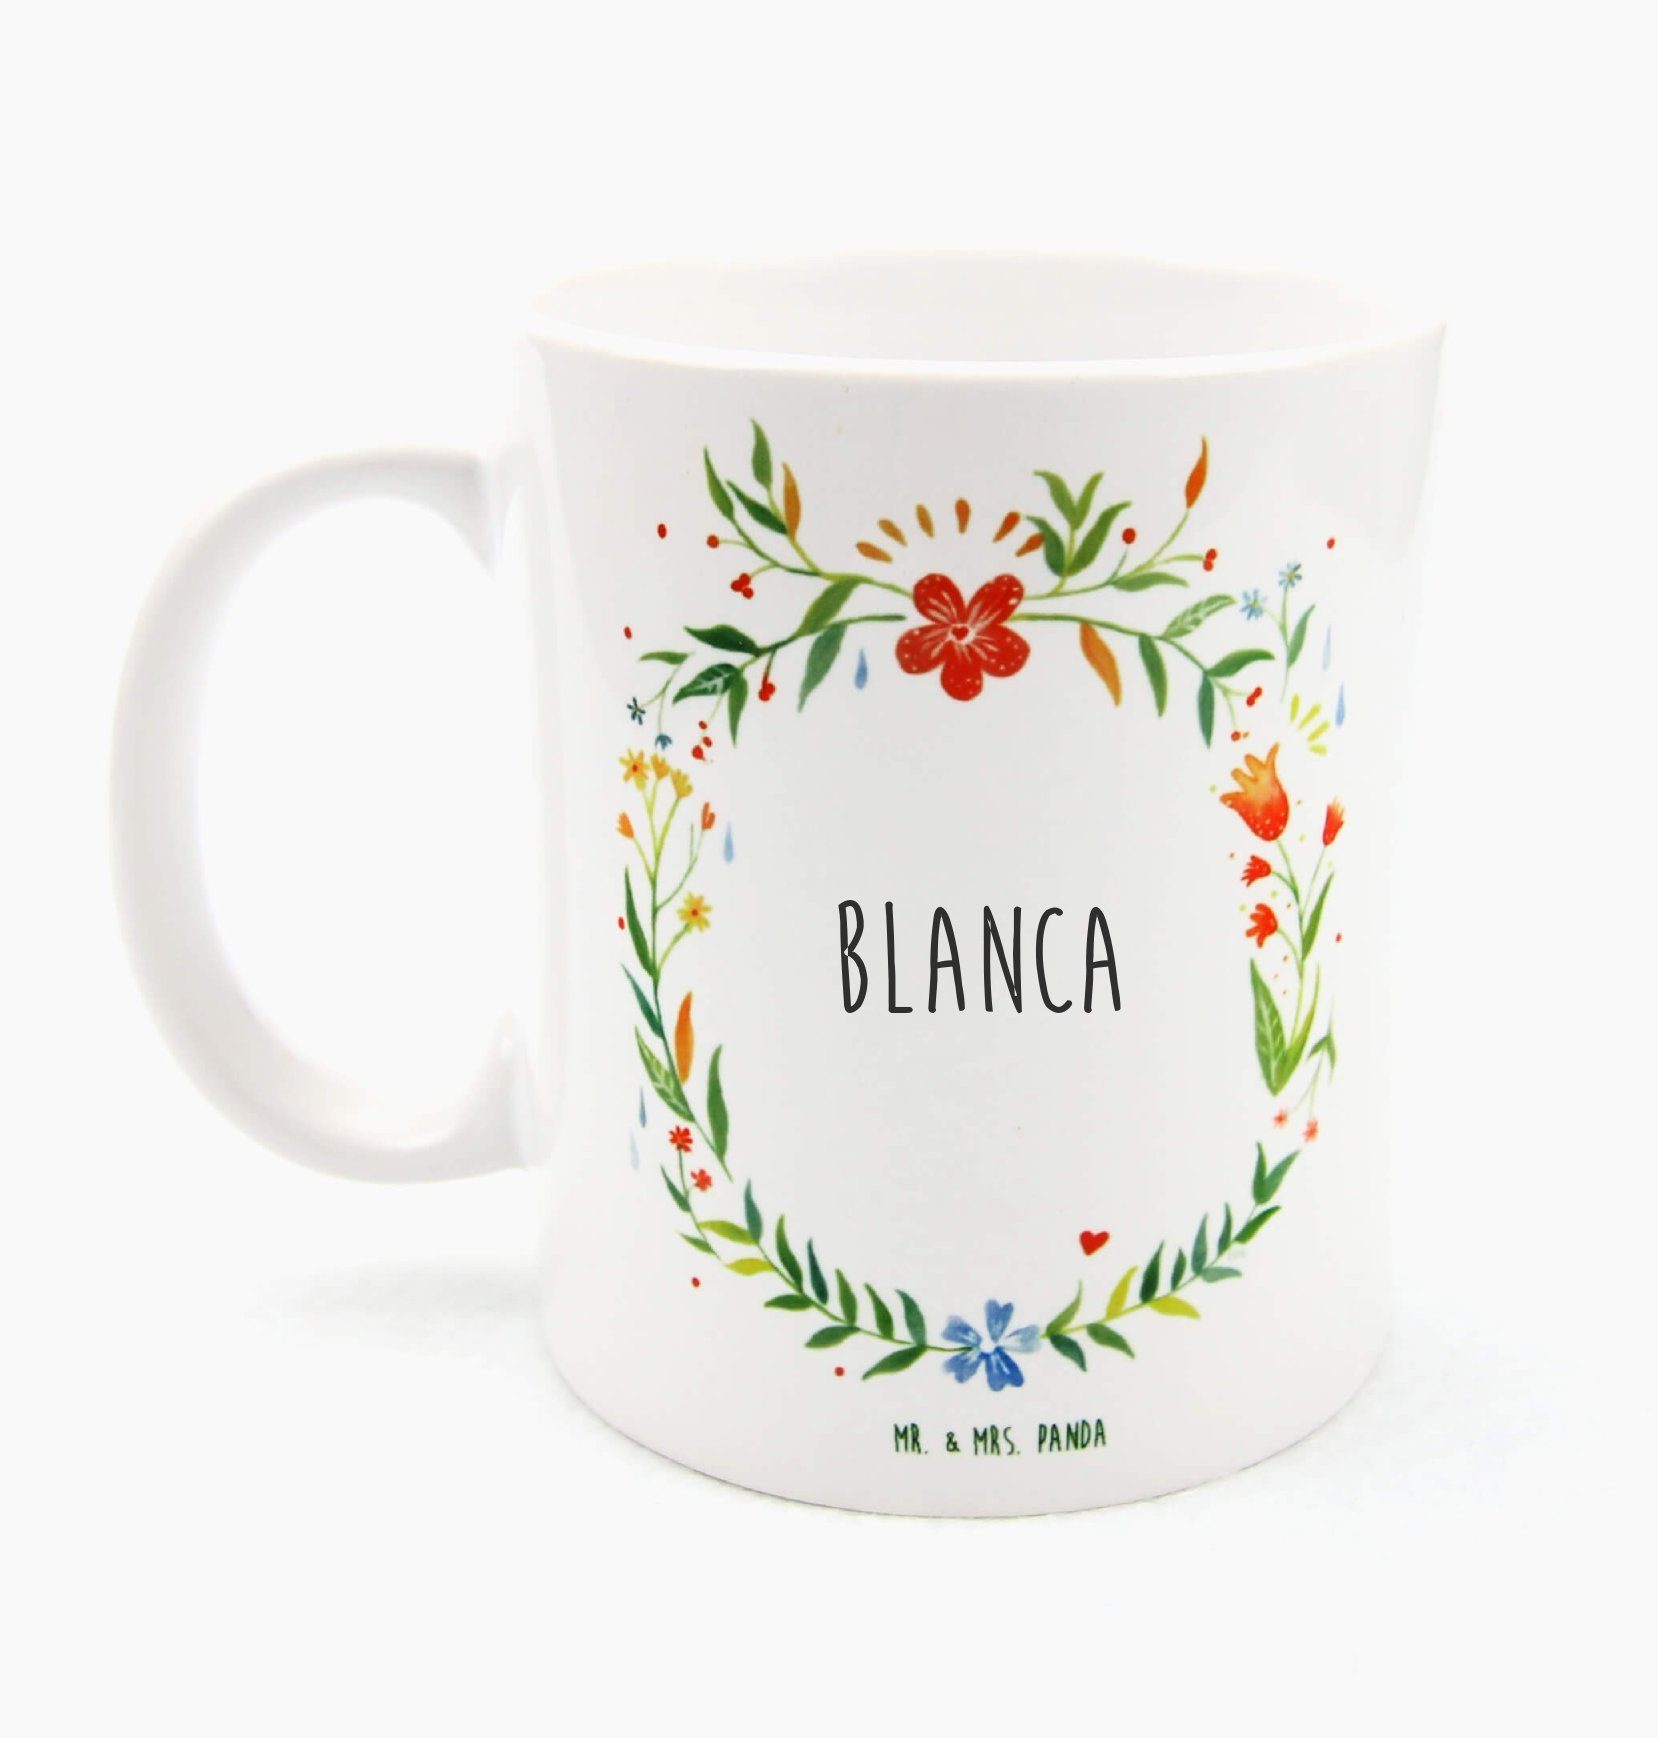 Mr. & Mrs. Panda Tasse Blanca - Geschenk, Teetasse, Tasse Sprüche, Porzellantasse, Kaffeebec, Keramik